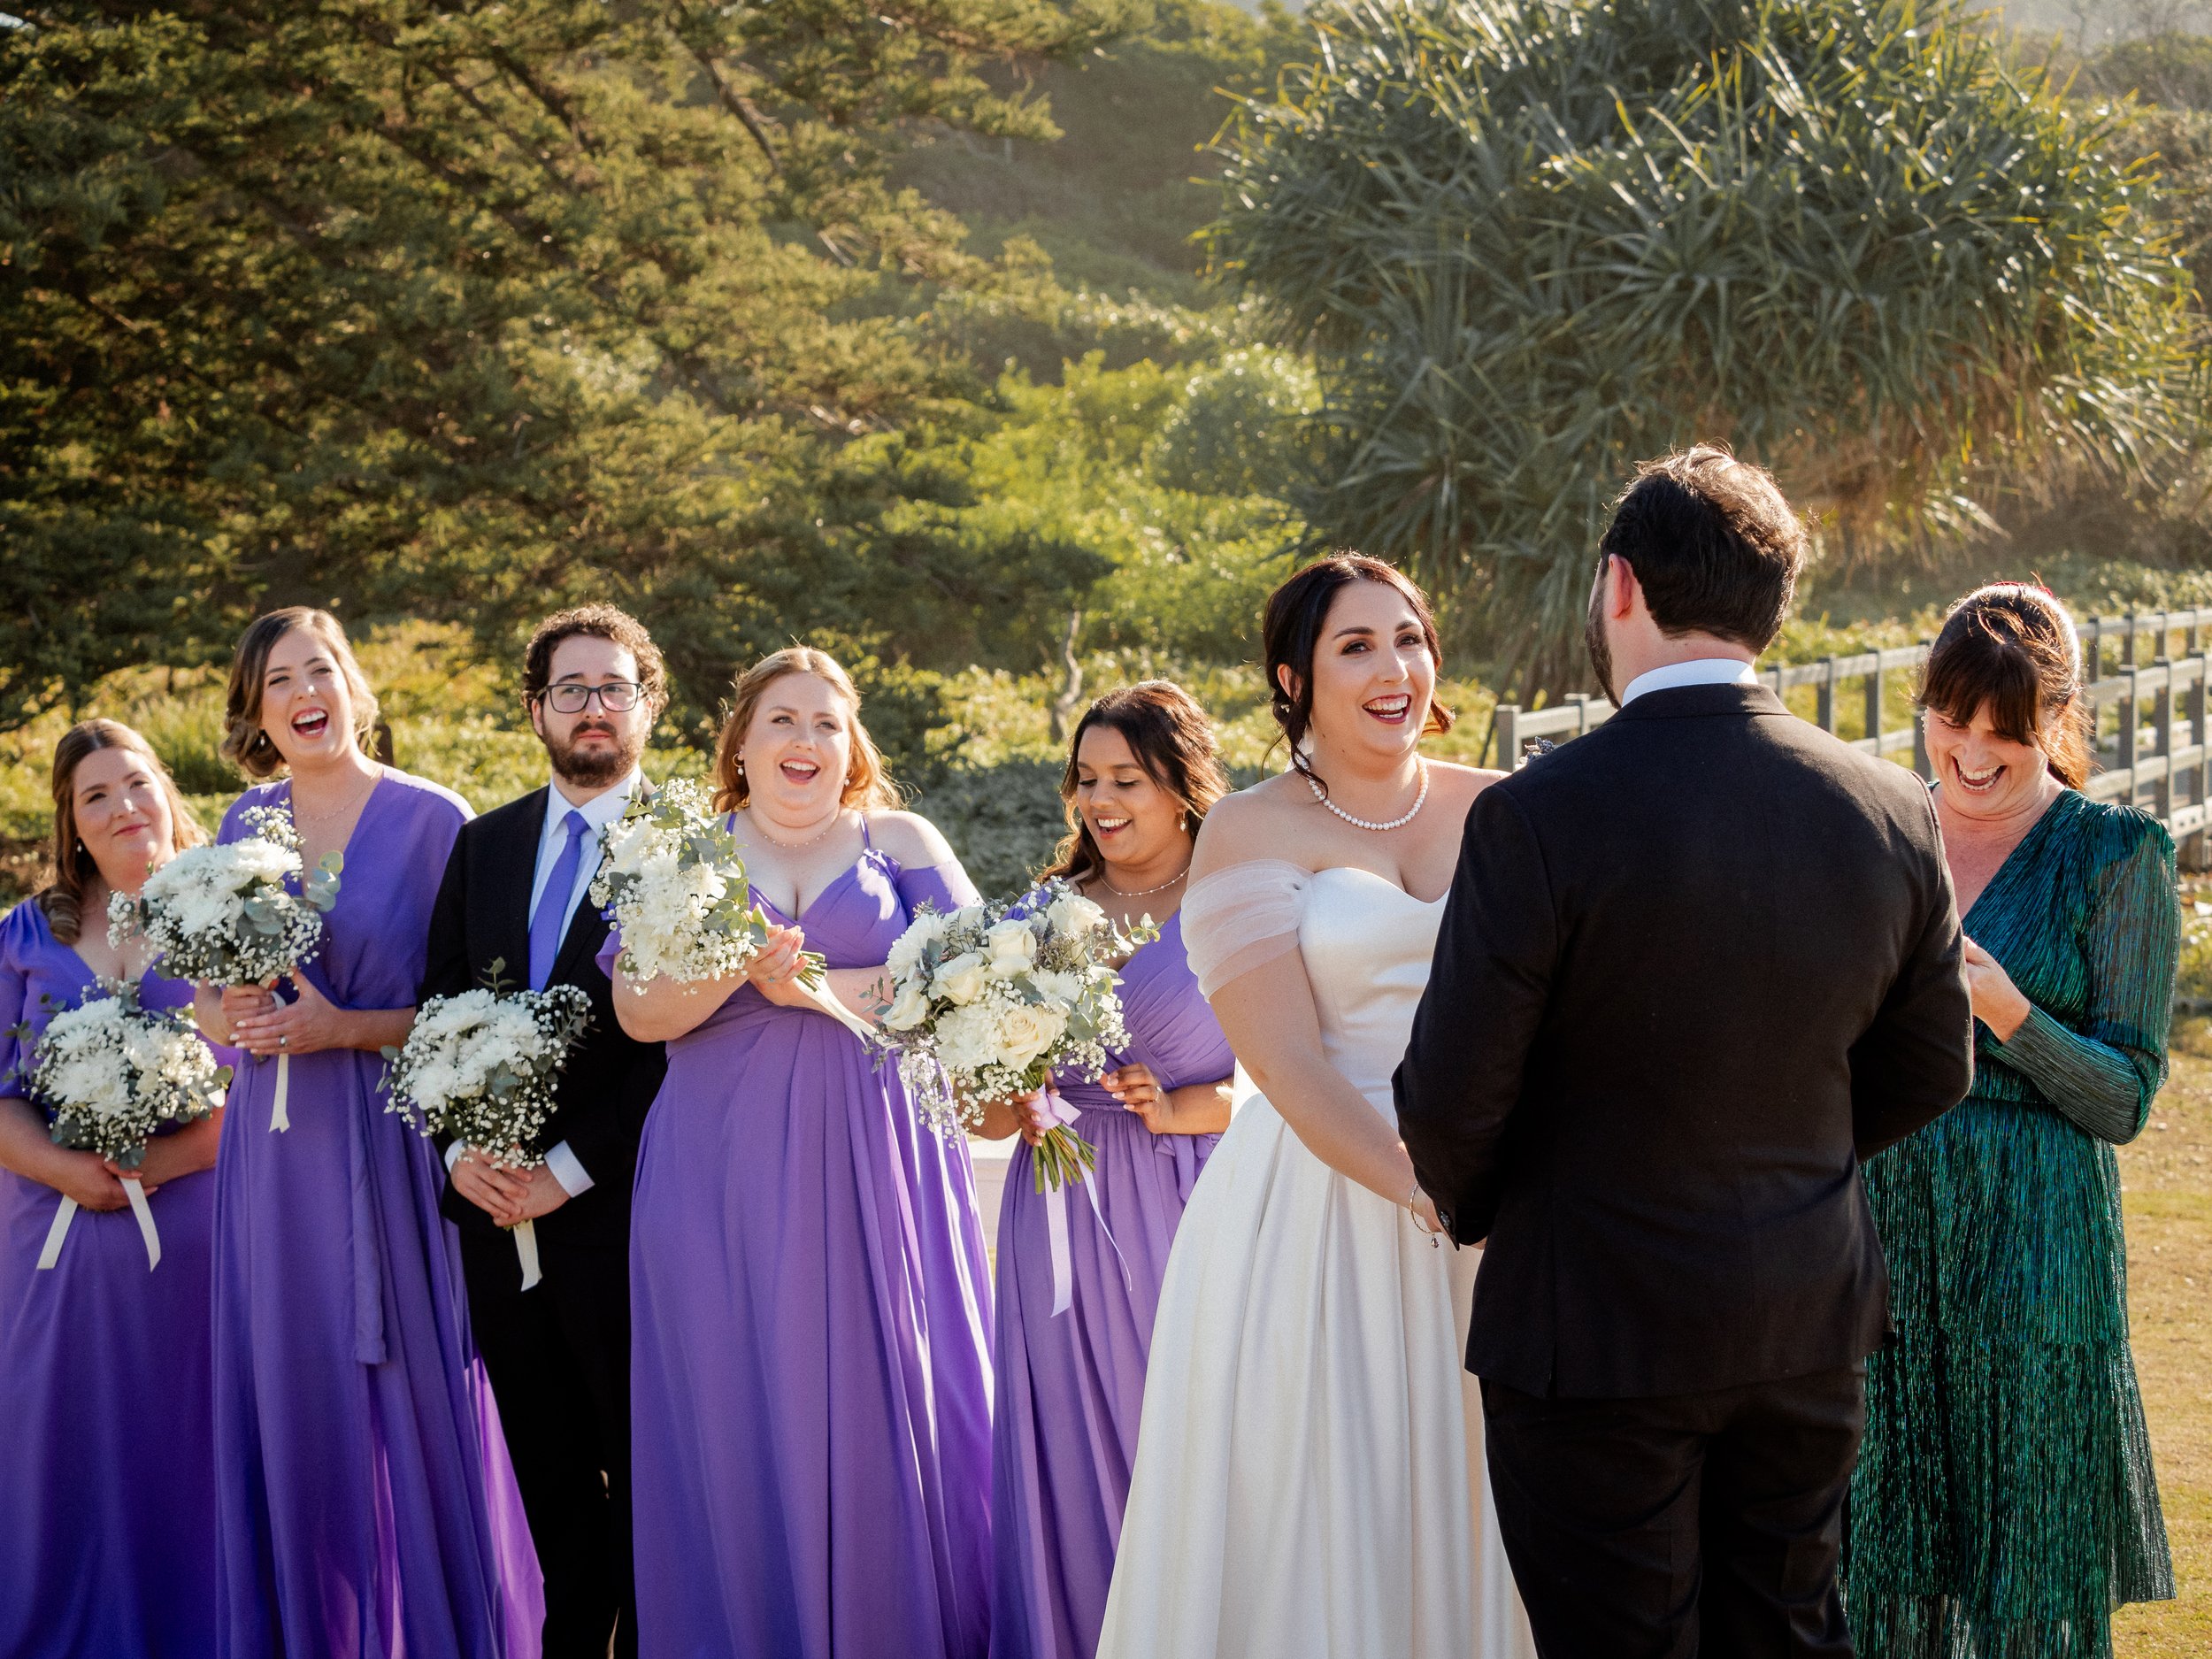 BYRON BAY LENNOX WEDDING CEREMONY LAUGHS.jpg